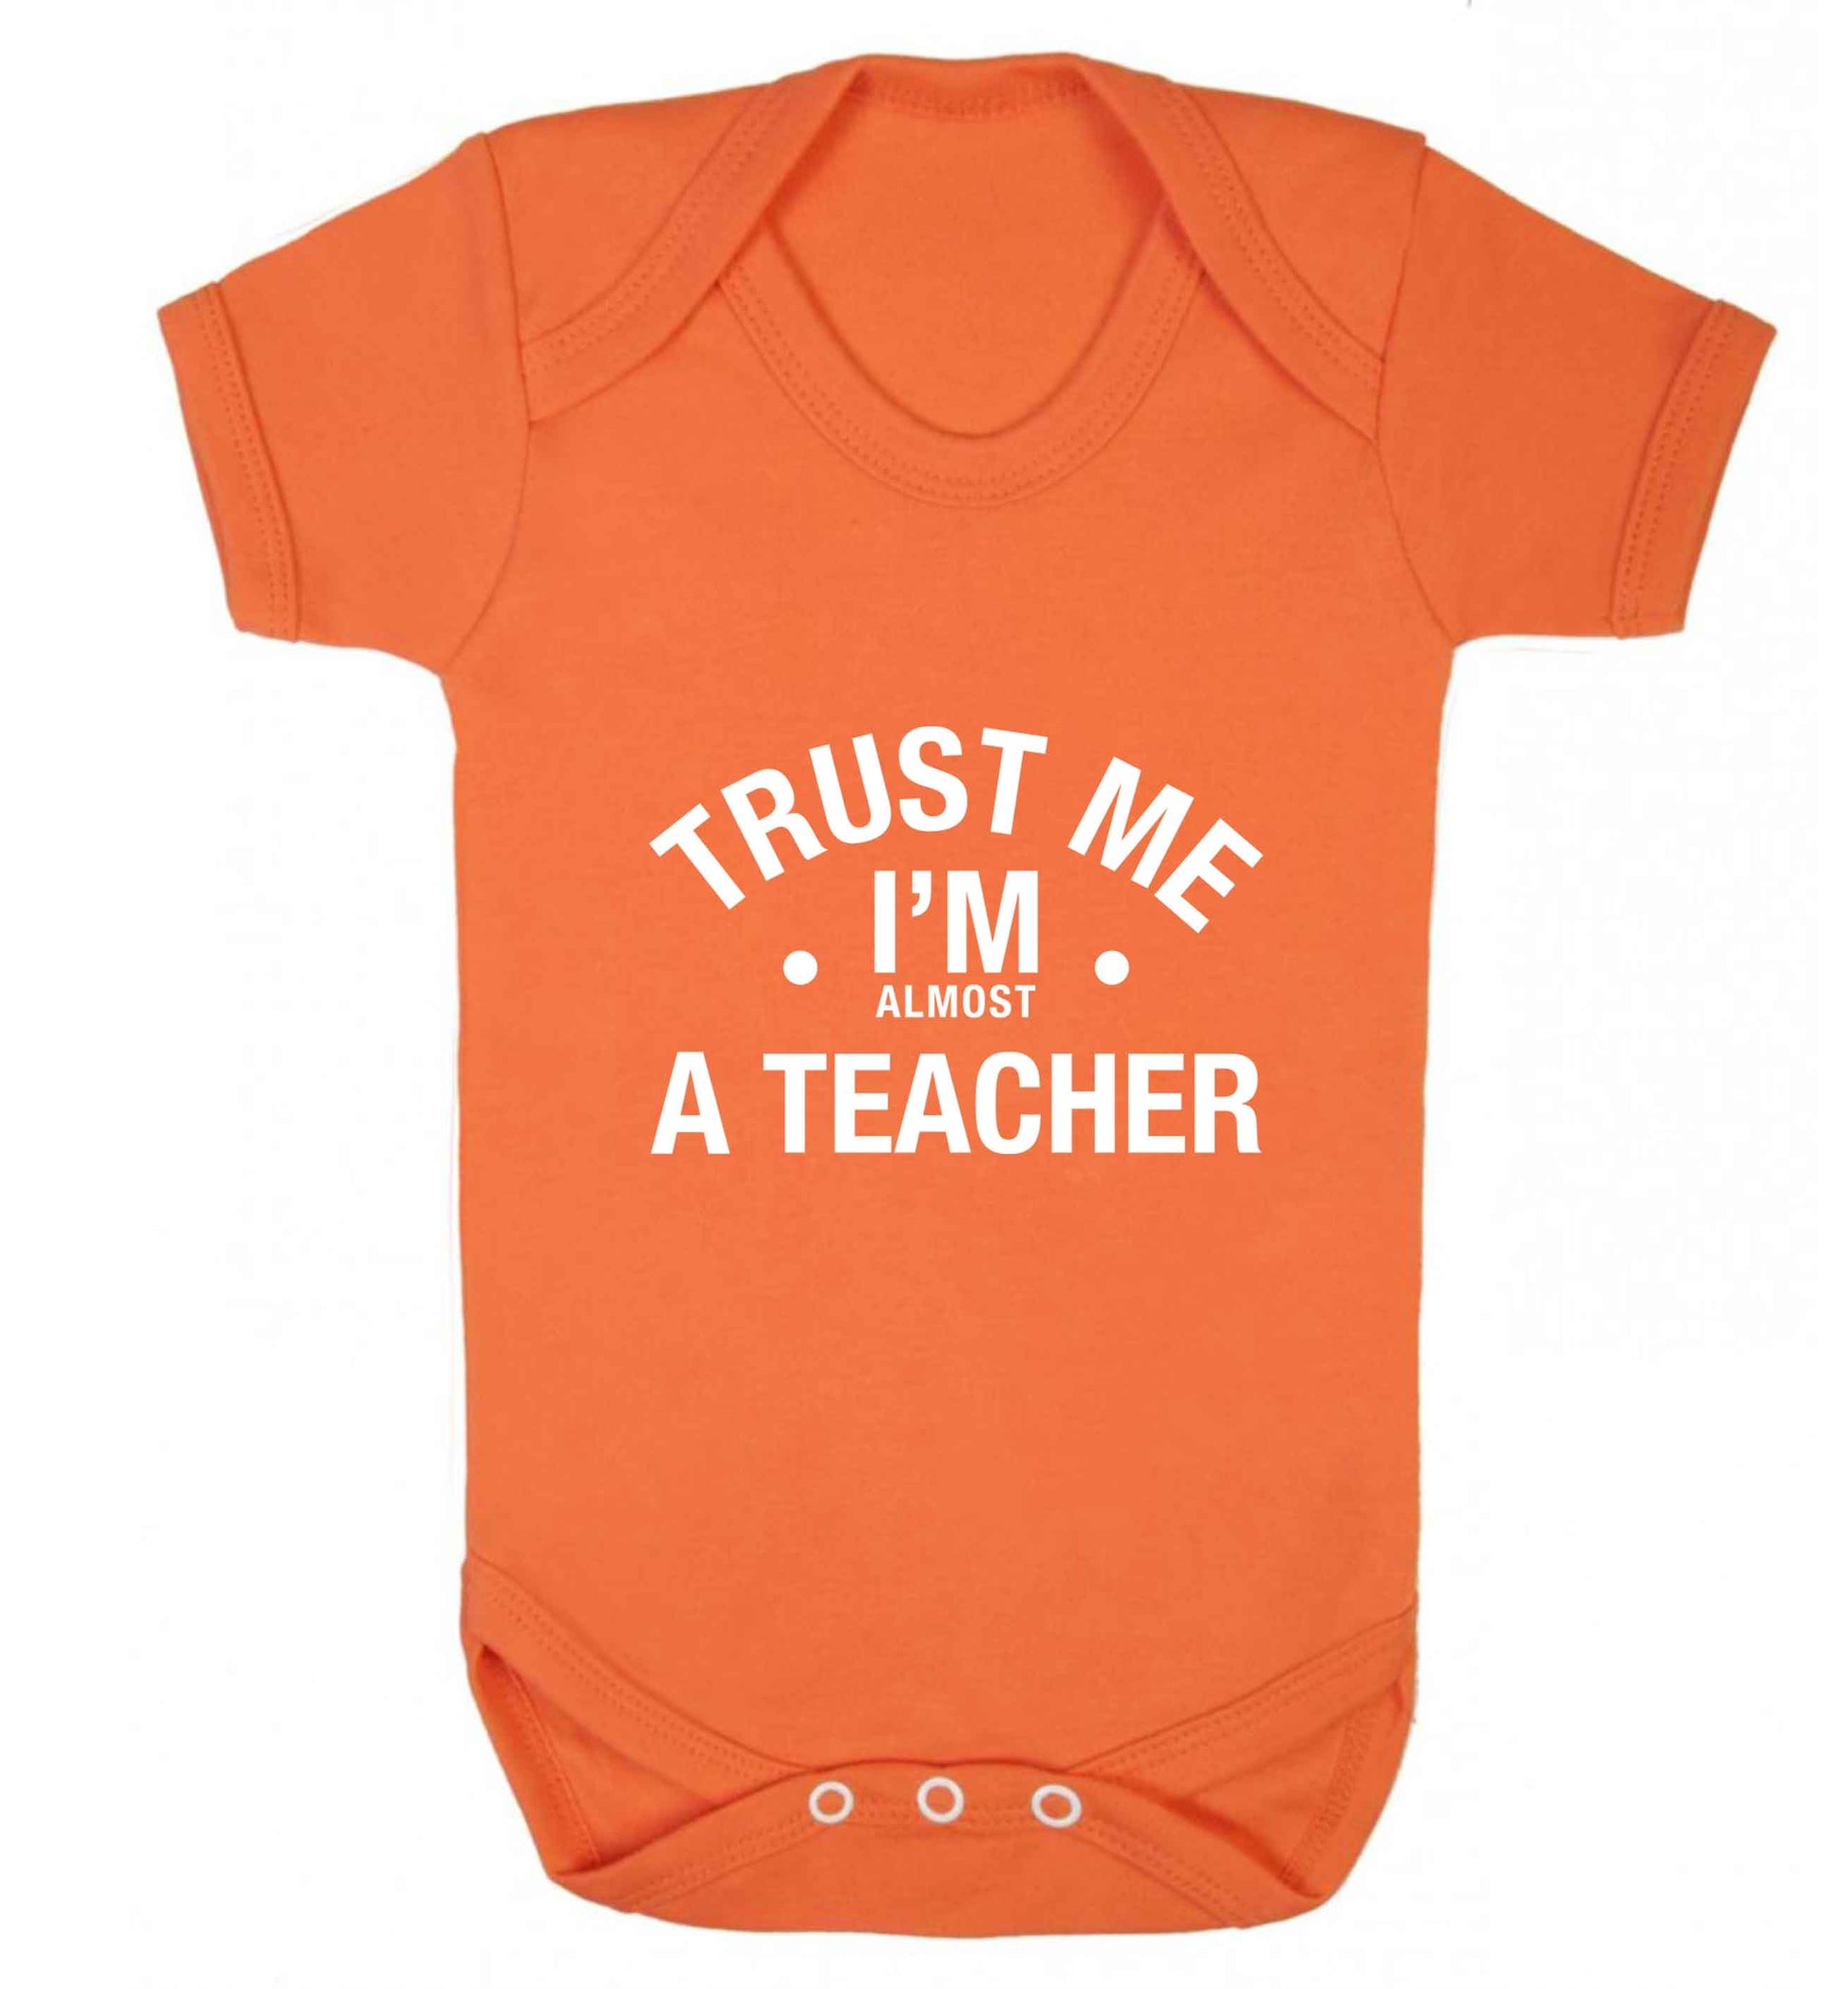 Trust me I'm almost a teacher baby vest orange 18-24 months